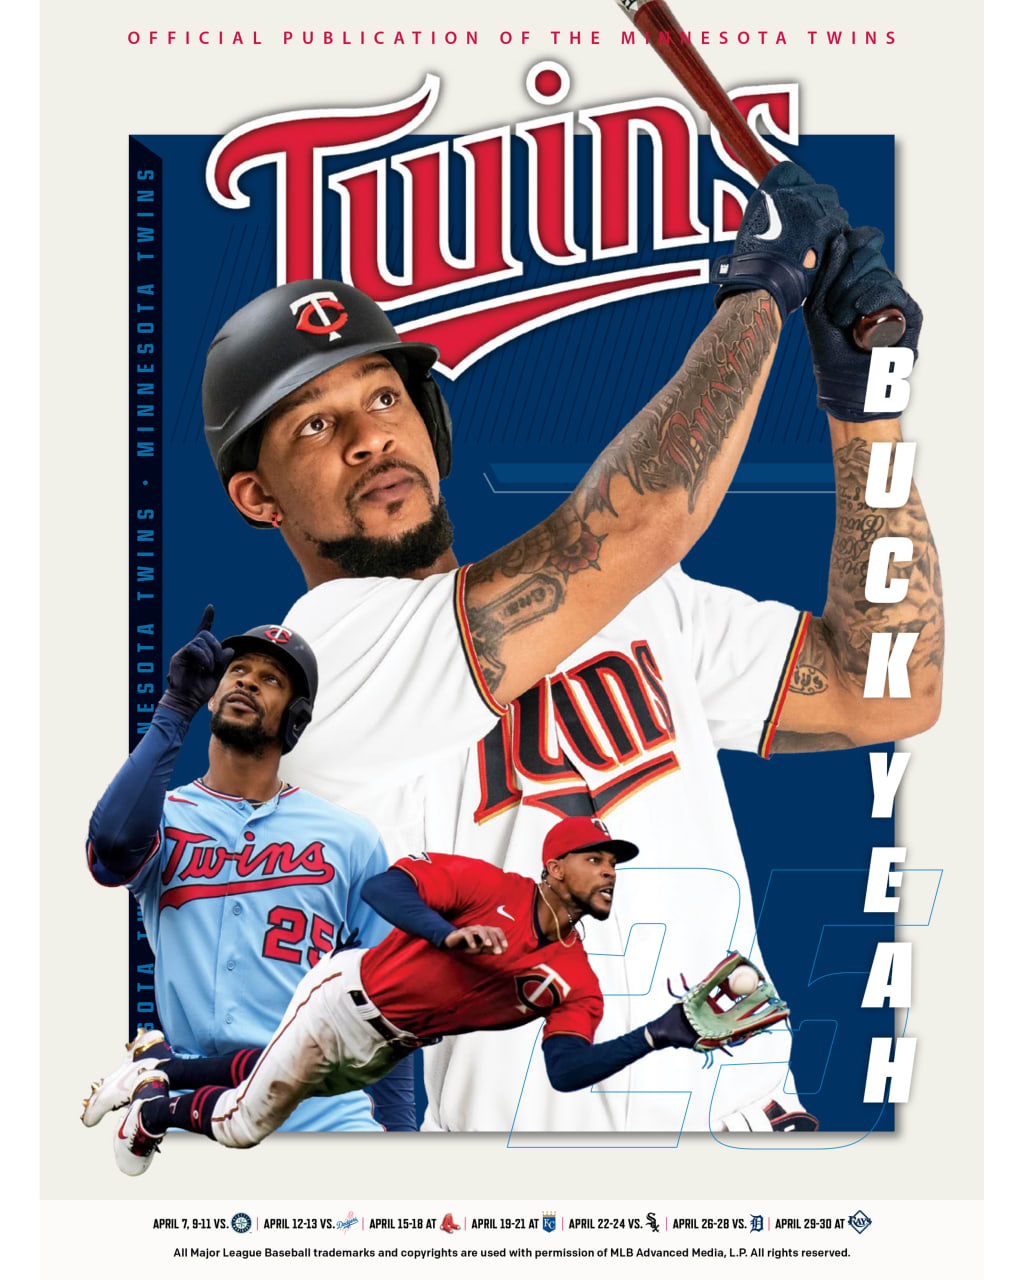 2010 Minnesota Twins Post Season MLB Baseball Media GUIDE